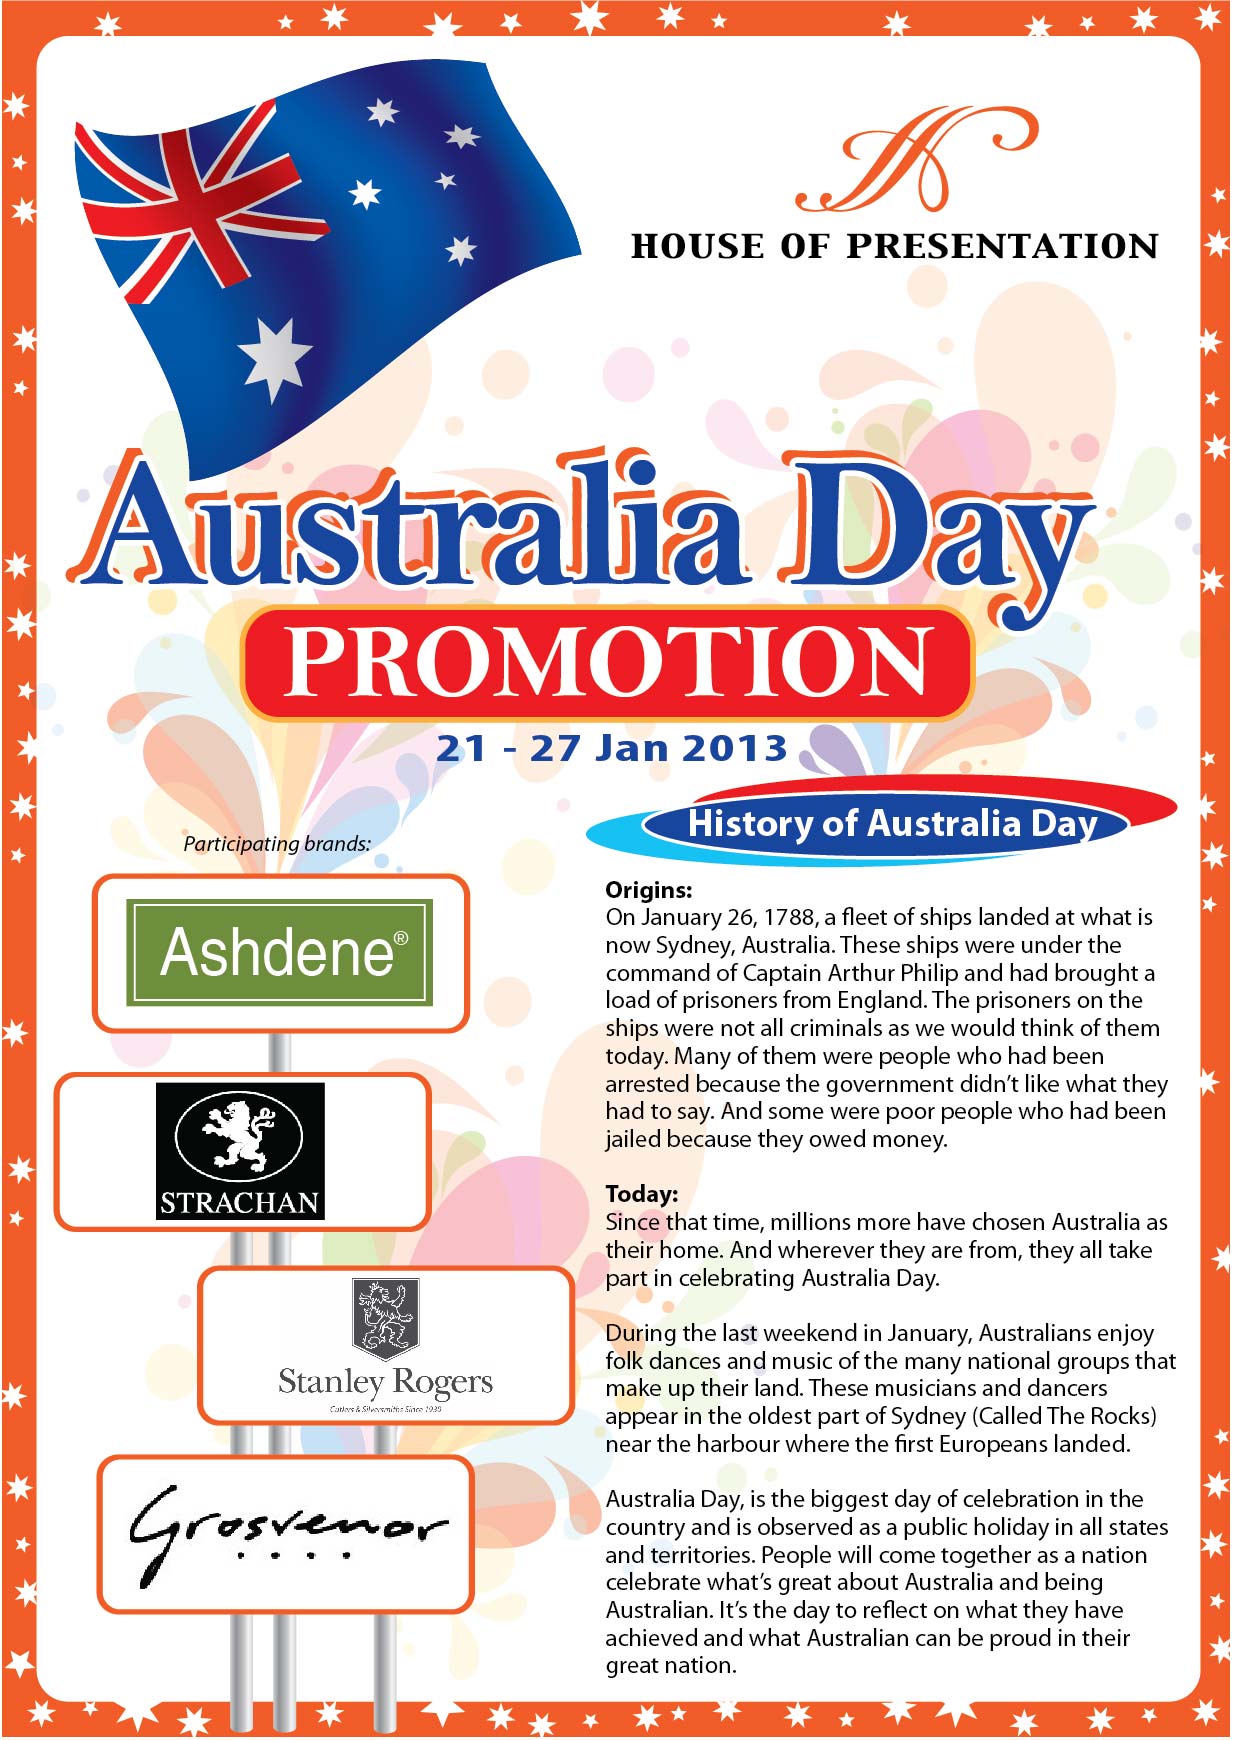 House of Presentation Australia Day Promotion